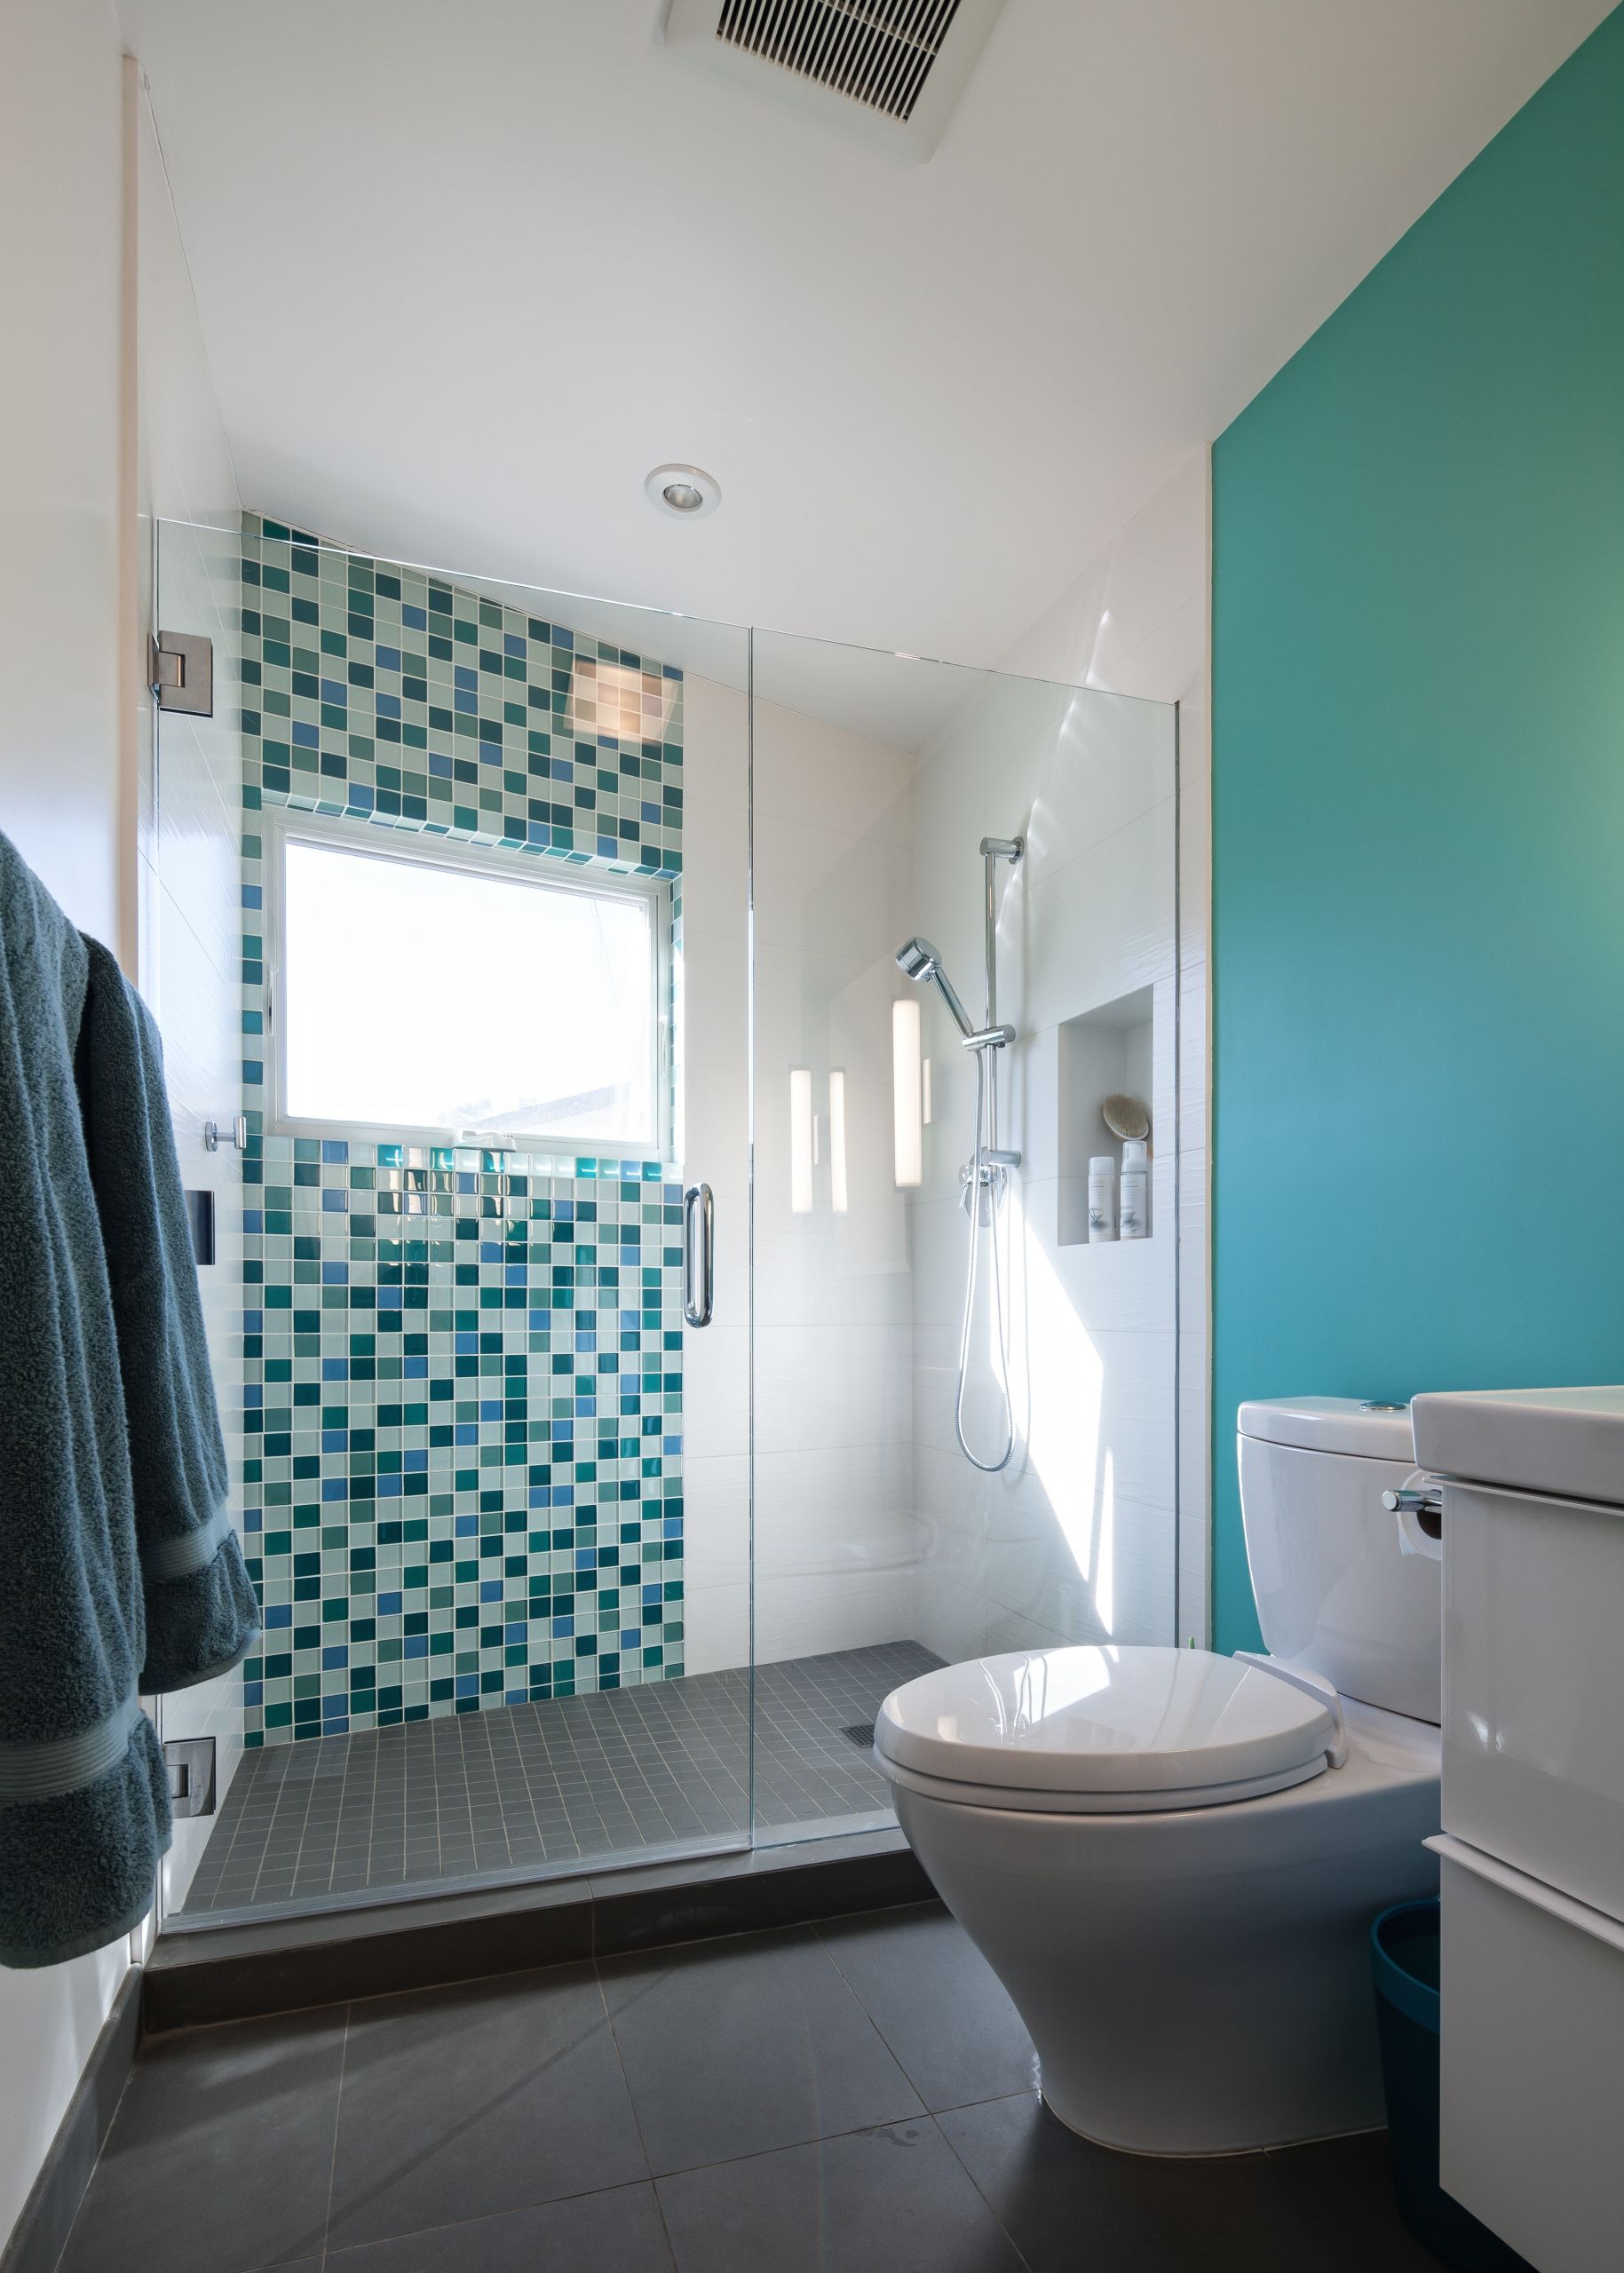 Turquoise Bathroom Wall Decor
 2017 Bathroom Wall Decoration And Color Ideas